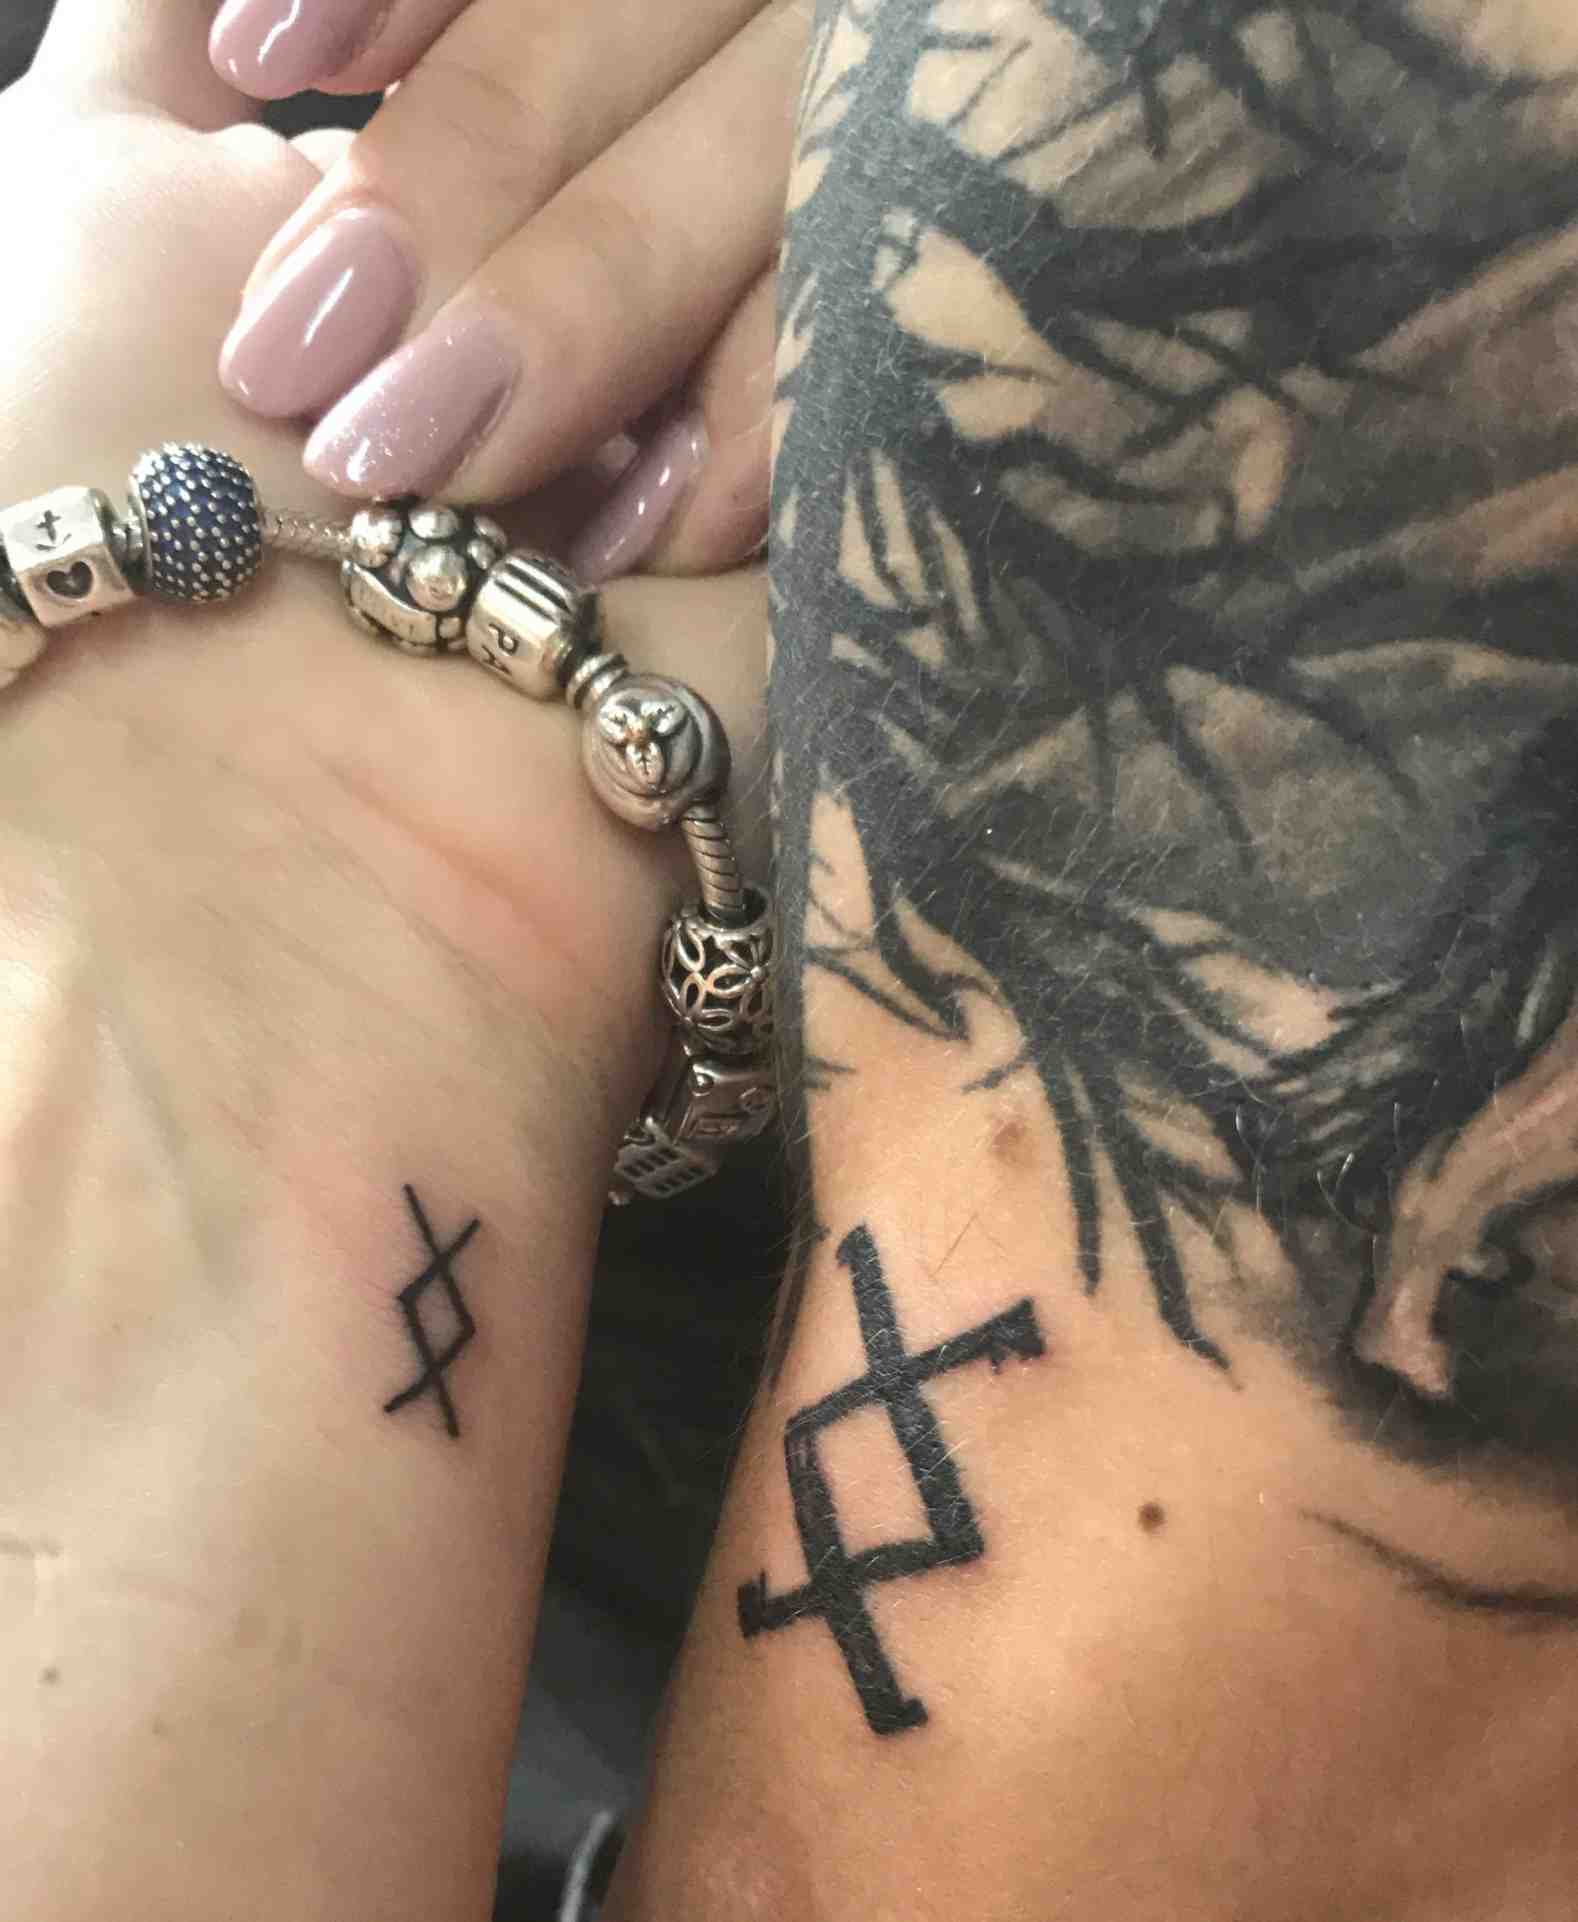 Inguz Nordic Runen Tattoos Wrist Tattoo Design for Women Small